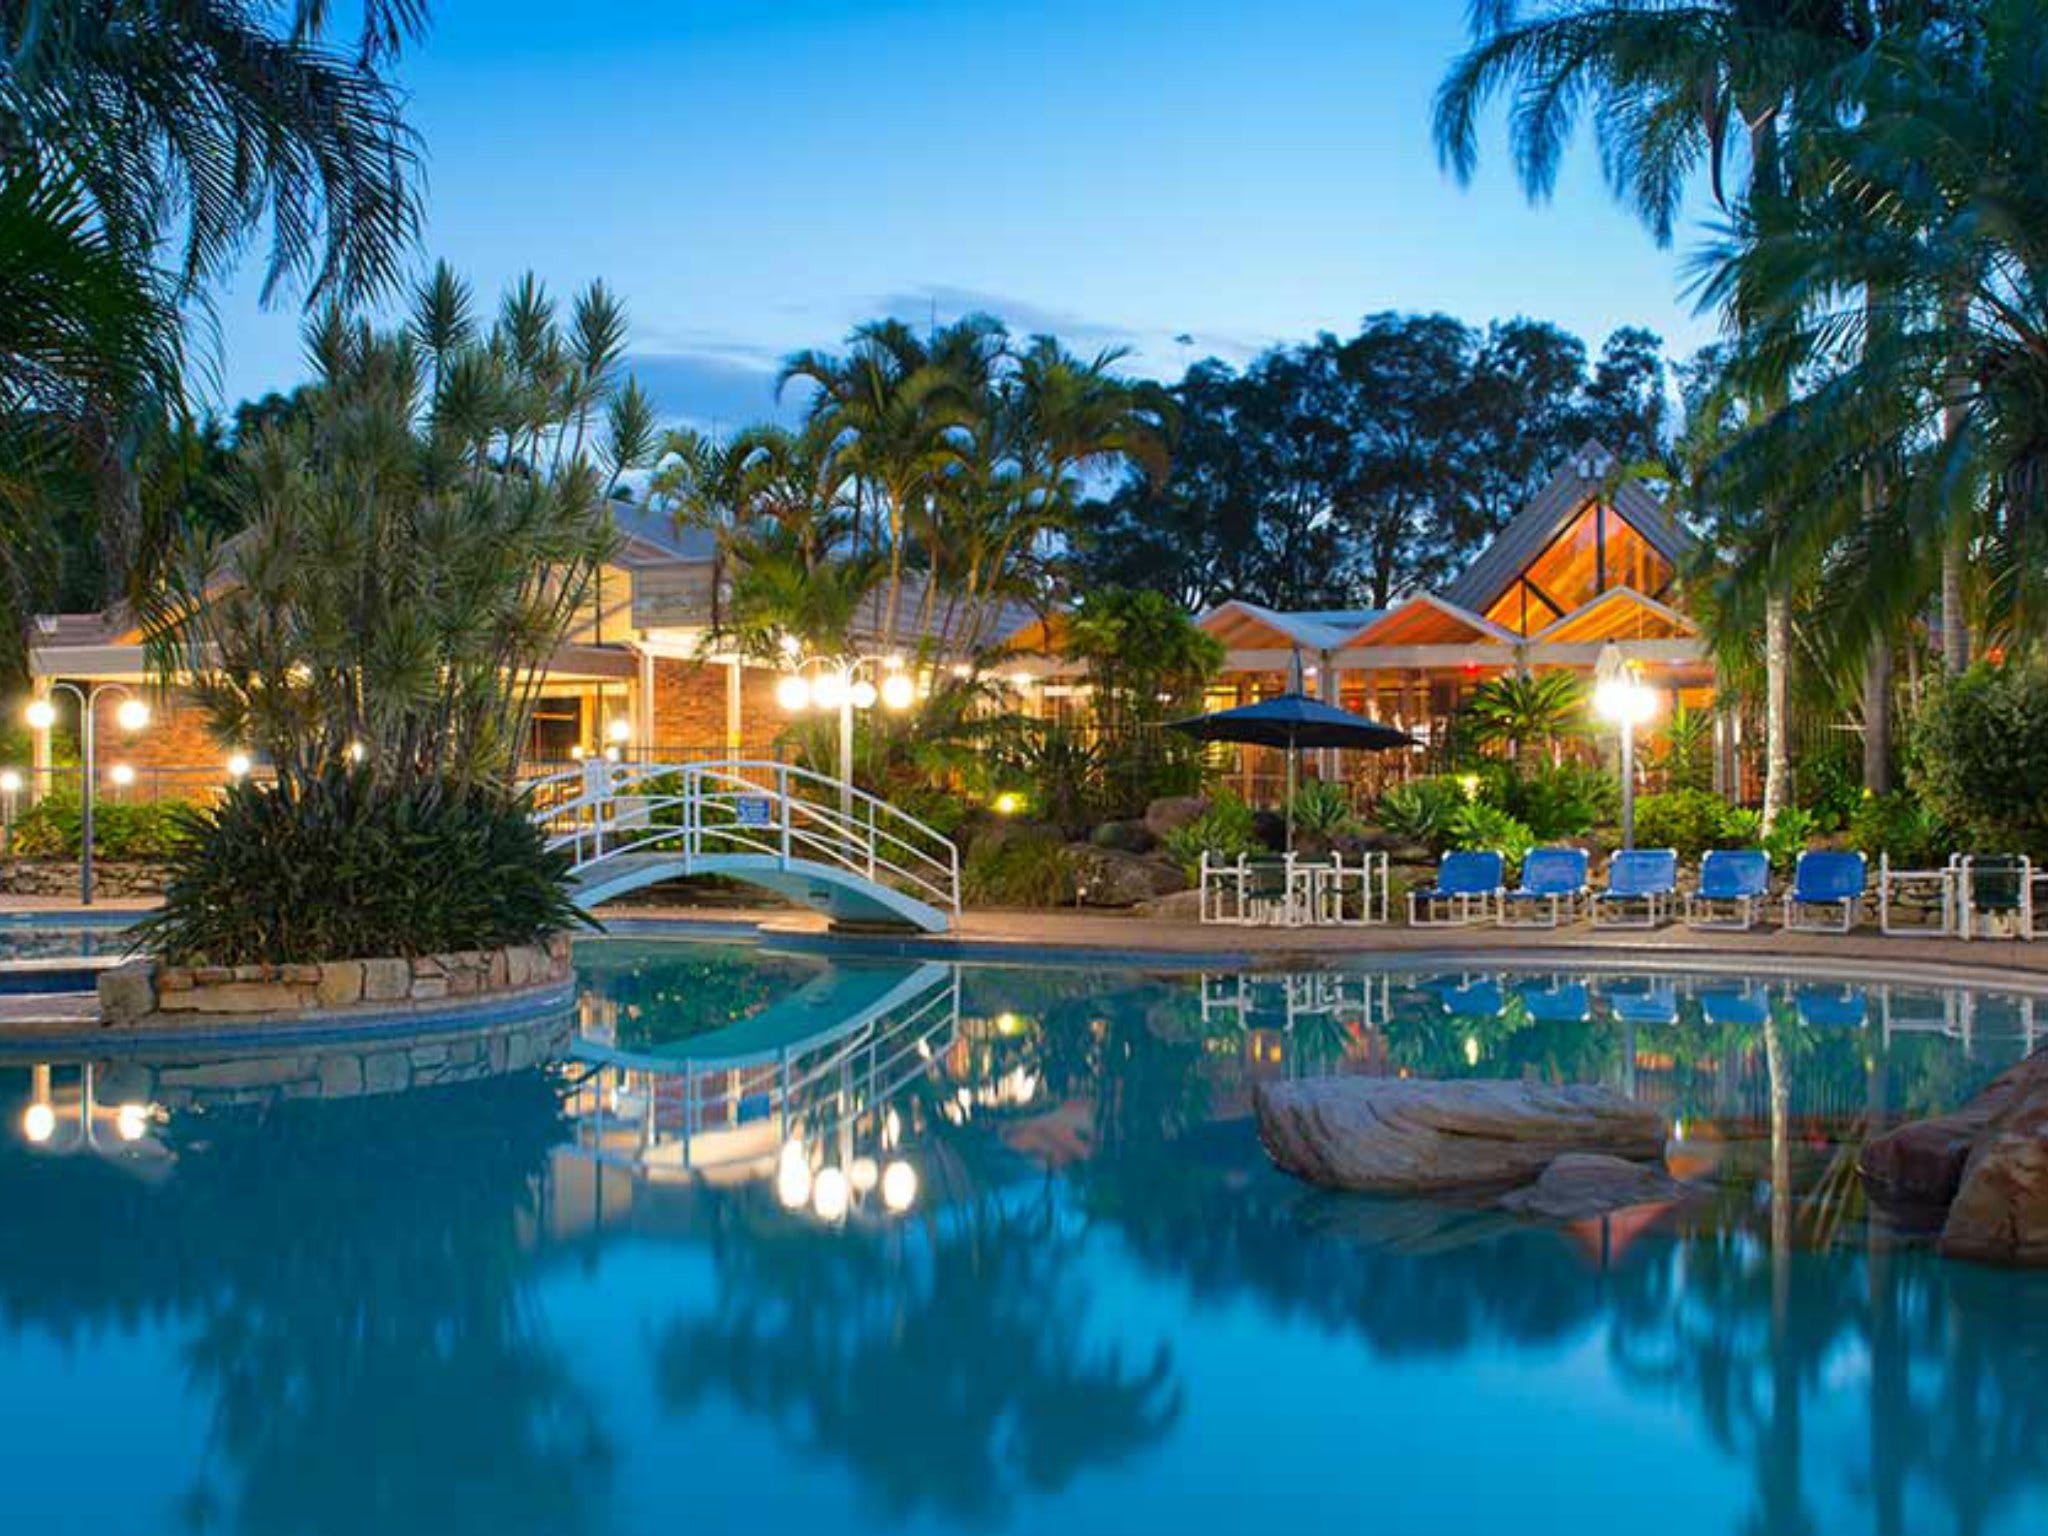 Boambee Bay Resort - Dalby Accommodation